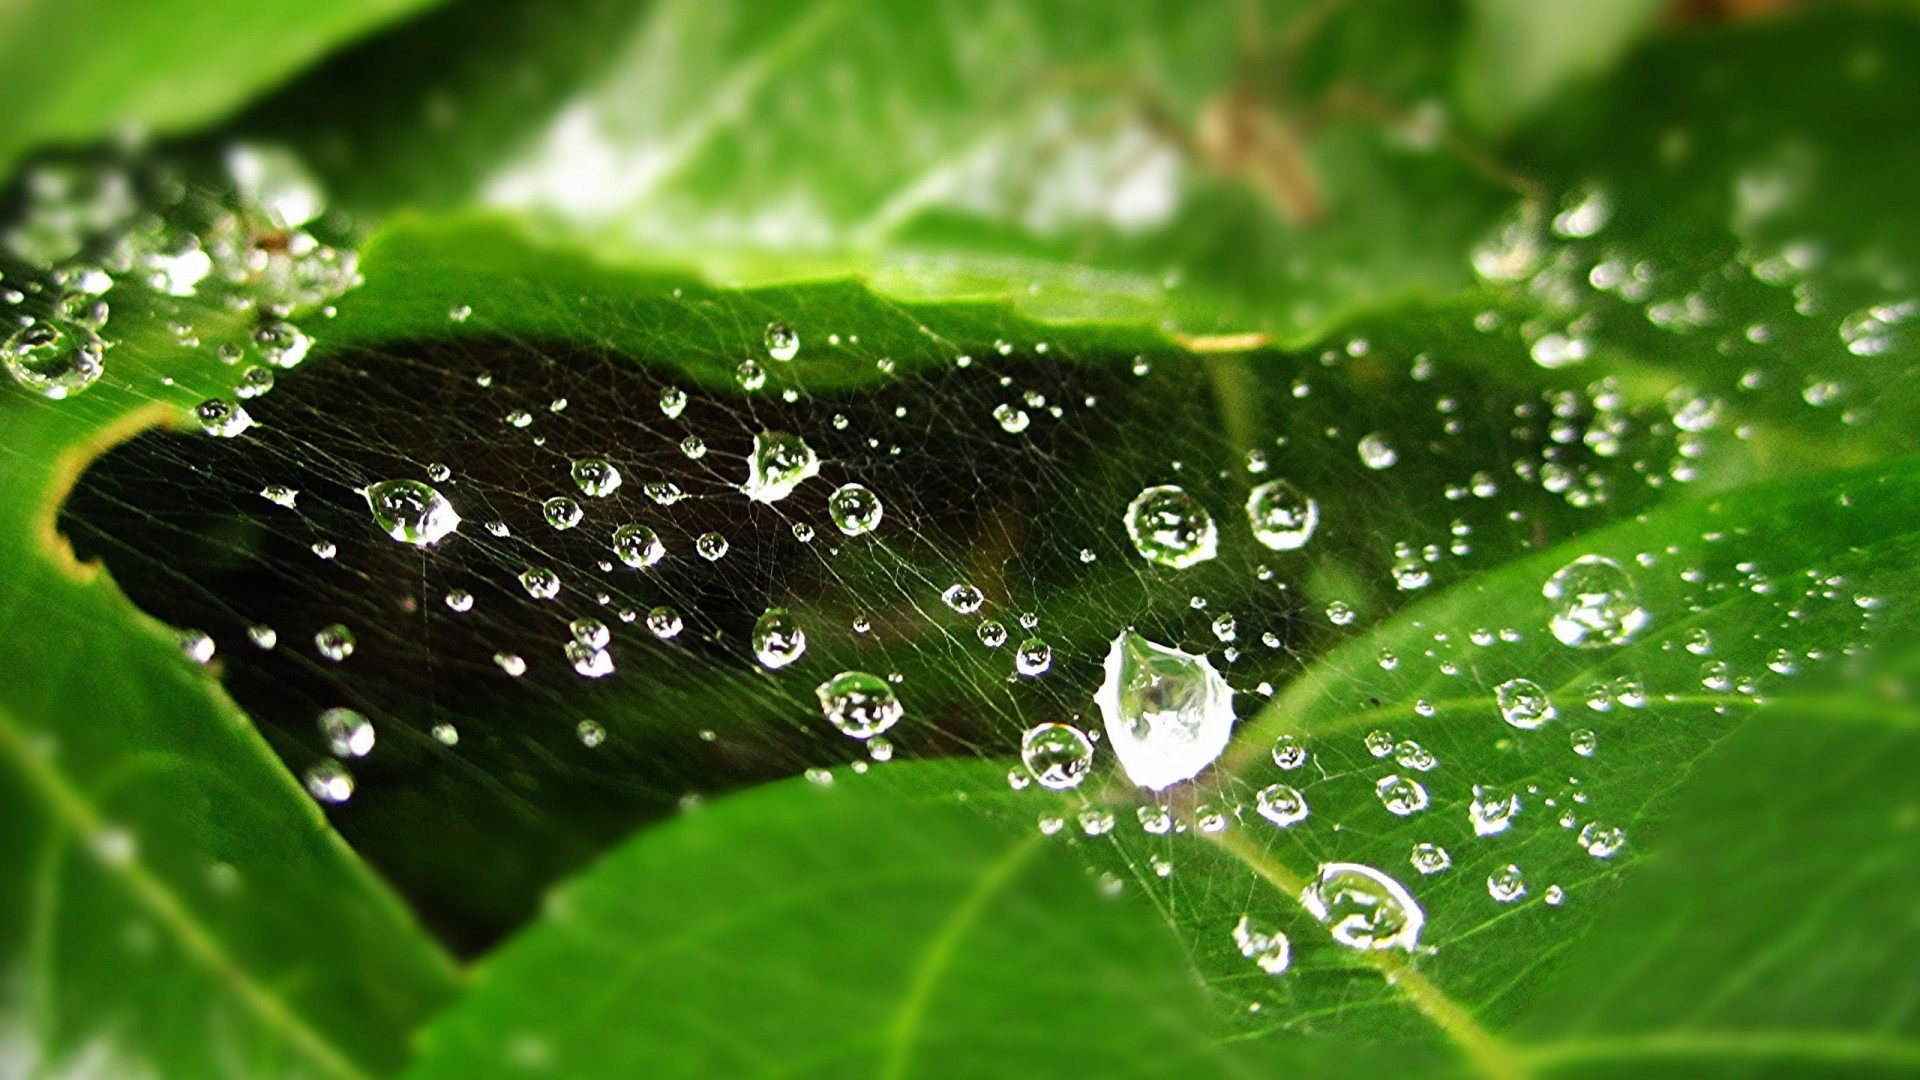 General 1920x1080 nature green water drops leaves detailed macro spiderwebs plants closeup